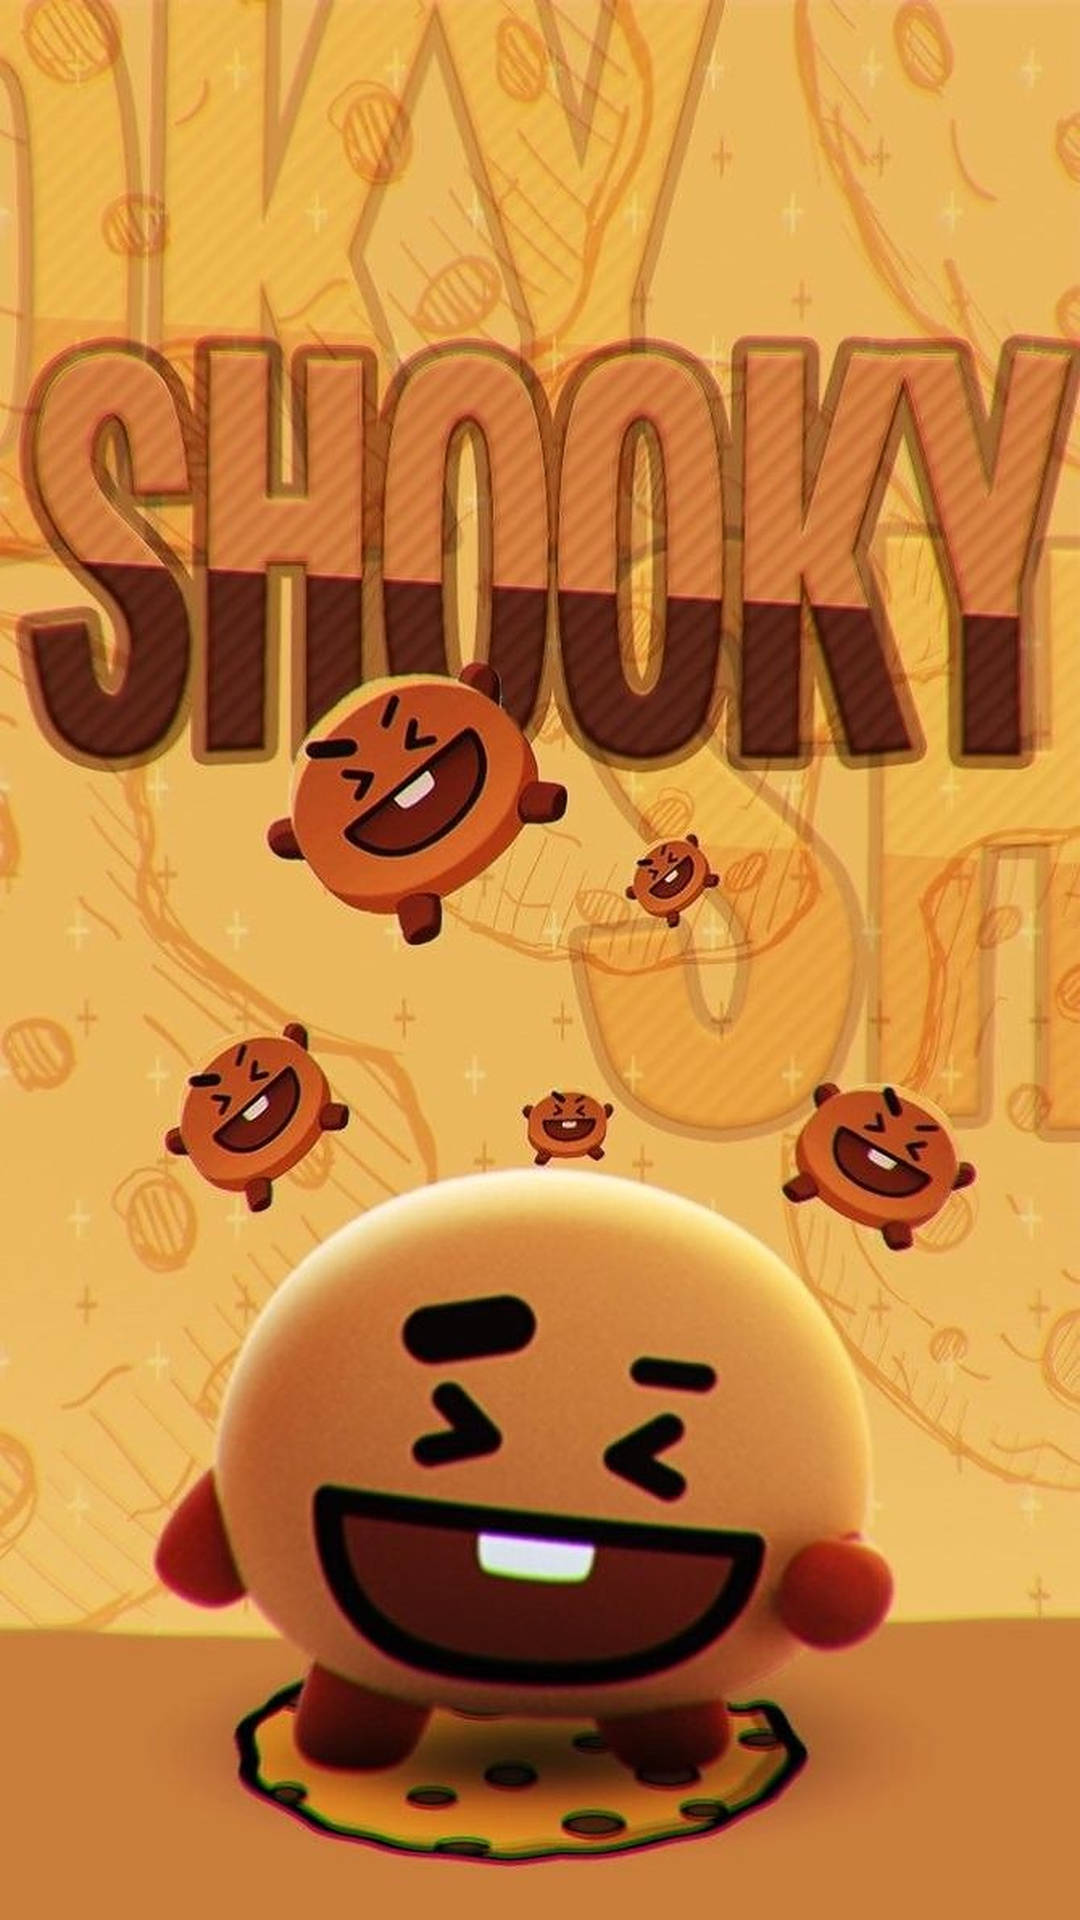 Shooky BT21 Poster Wallpaper